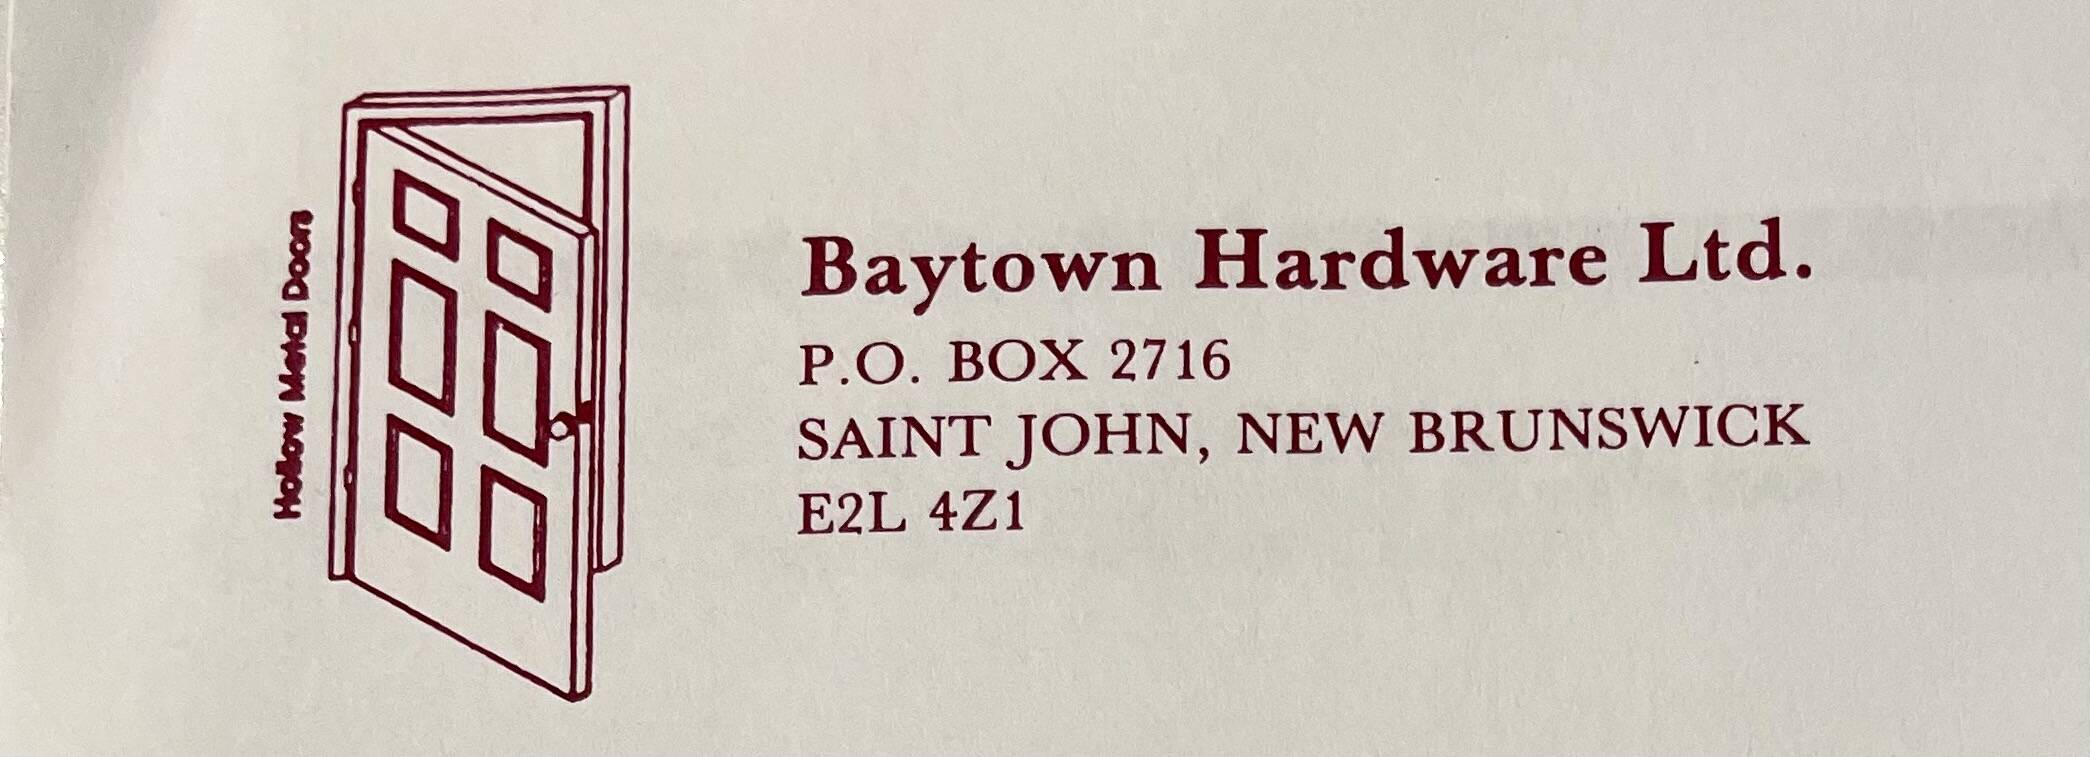 Baytown Hardware Ltd.